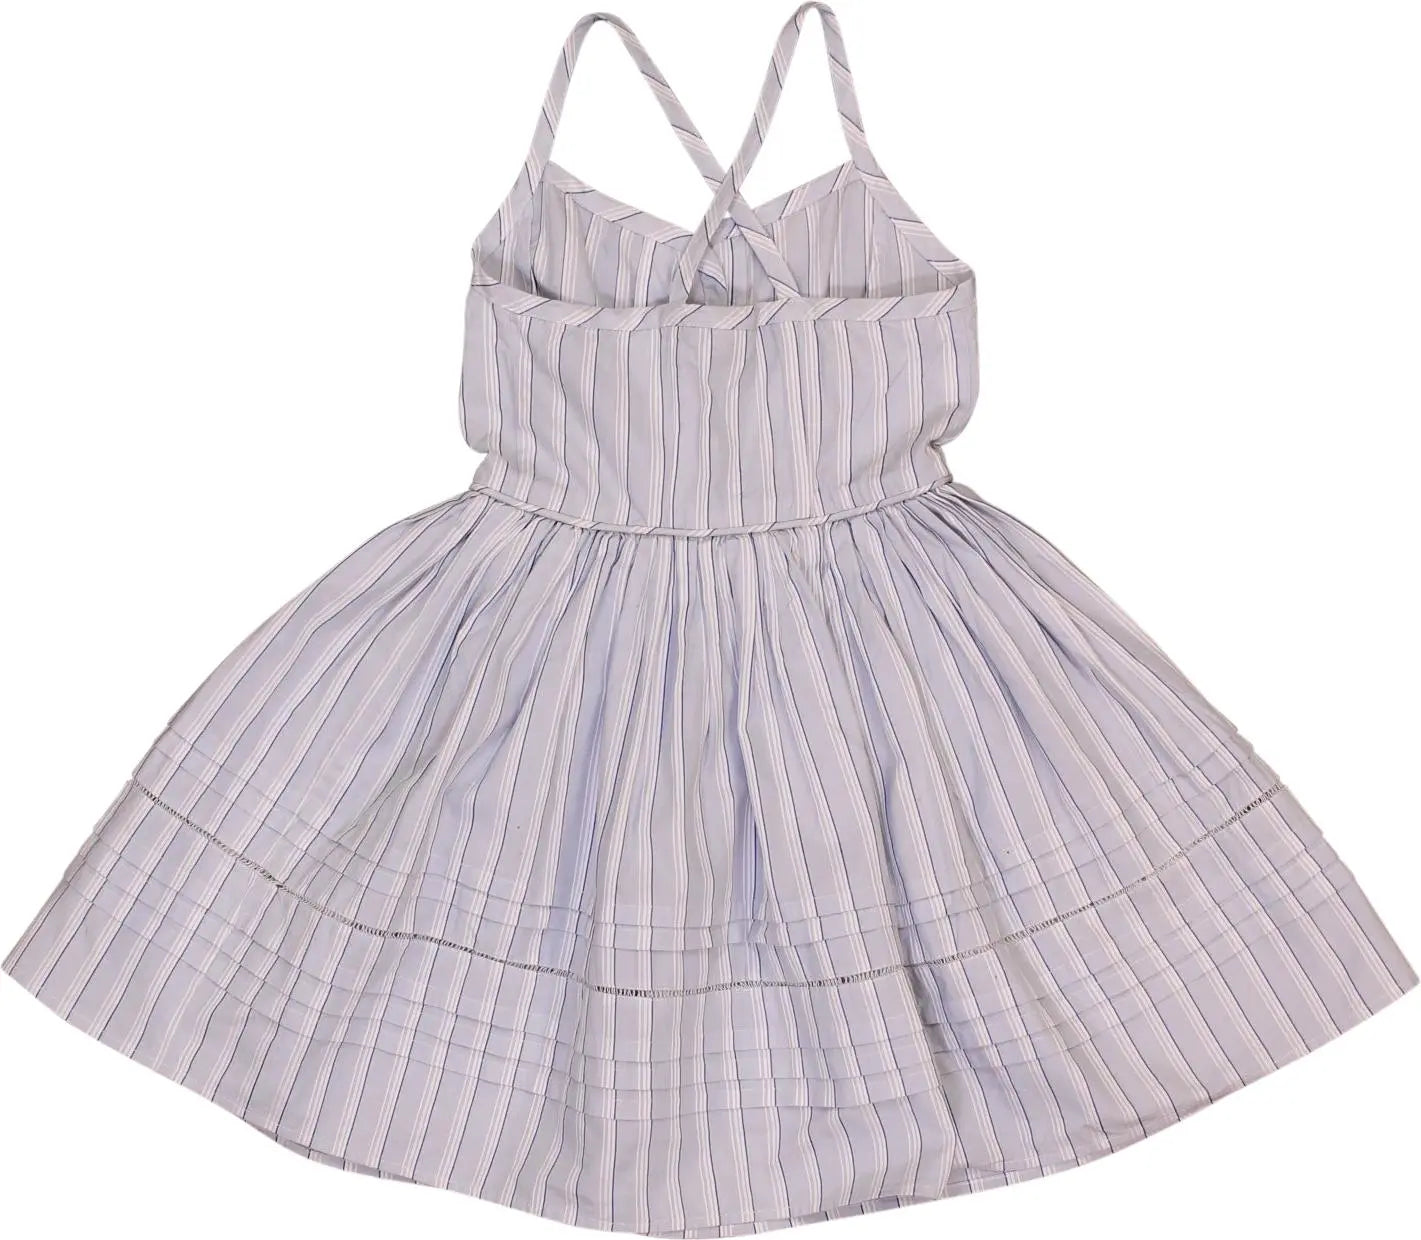 Ralph Lauren - Blue Striped Dress by Ralph Lauren- ThriftTale.com - Vintage and second handclothing